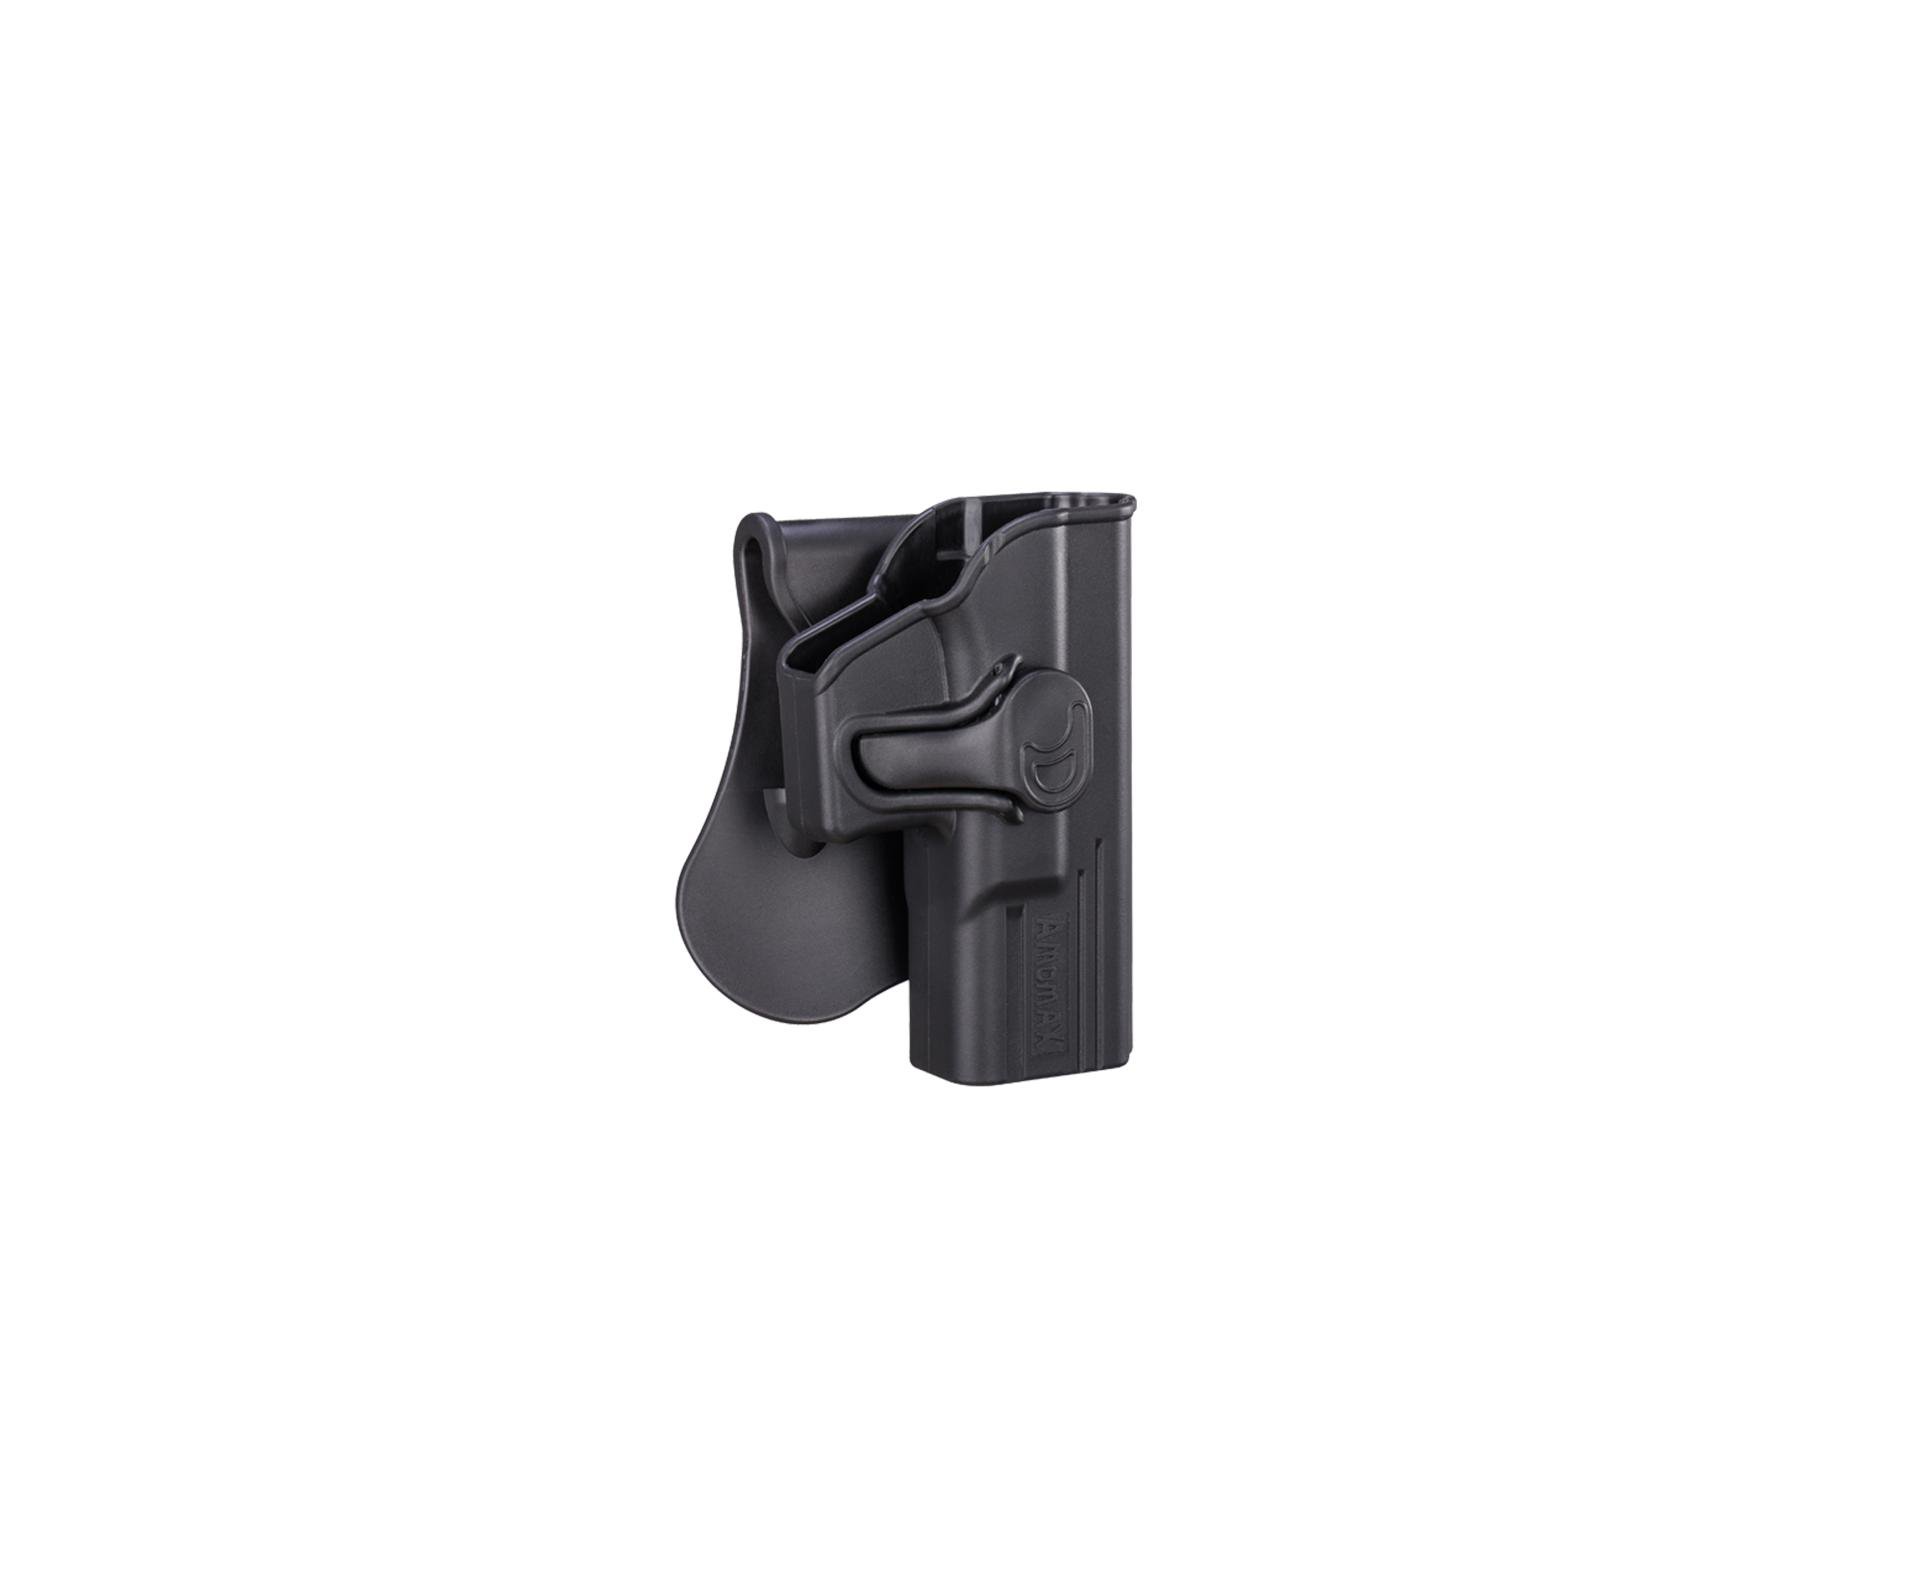 Coldre Para Pistola Glock Modelo 19, 25 E Ics Ble-xae Series - Amomax